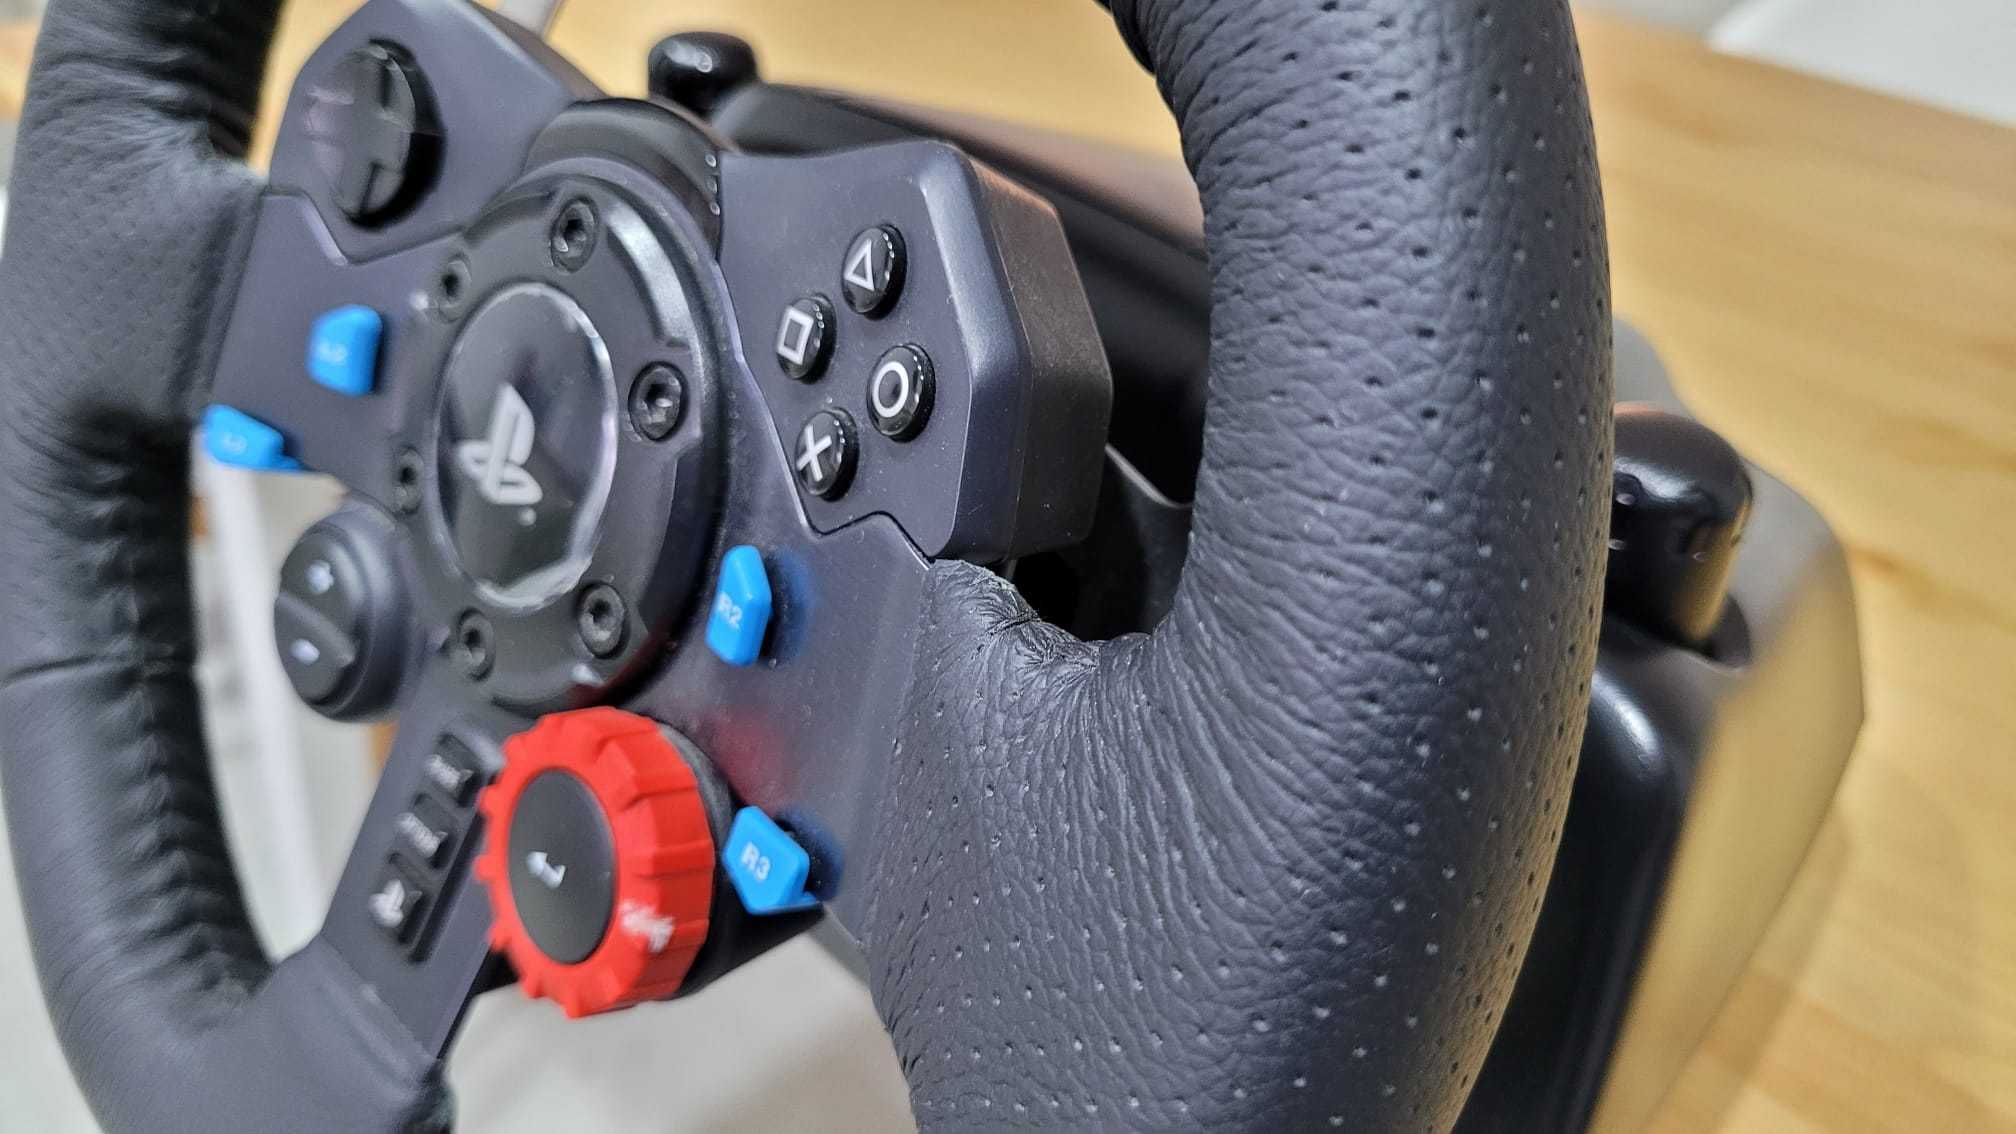 Volante e Pedais Gamer Logitech G29 Driving Force para PS5,PS4 e PC